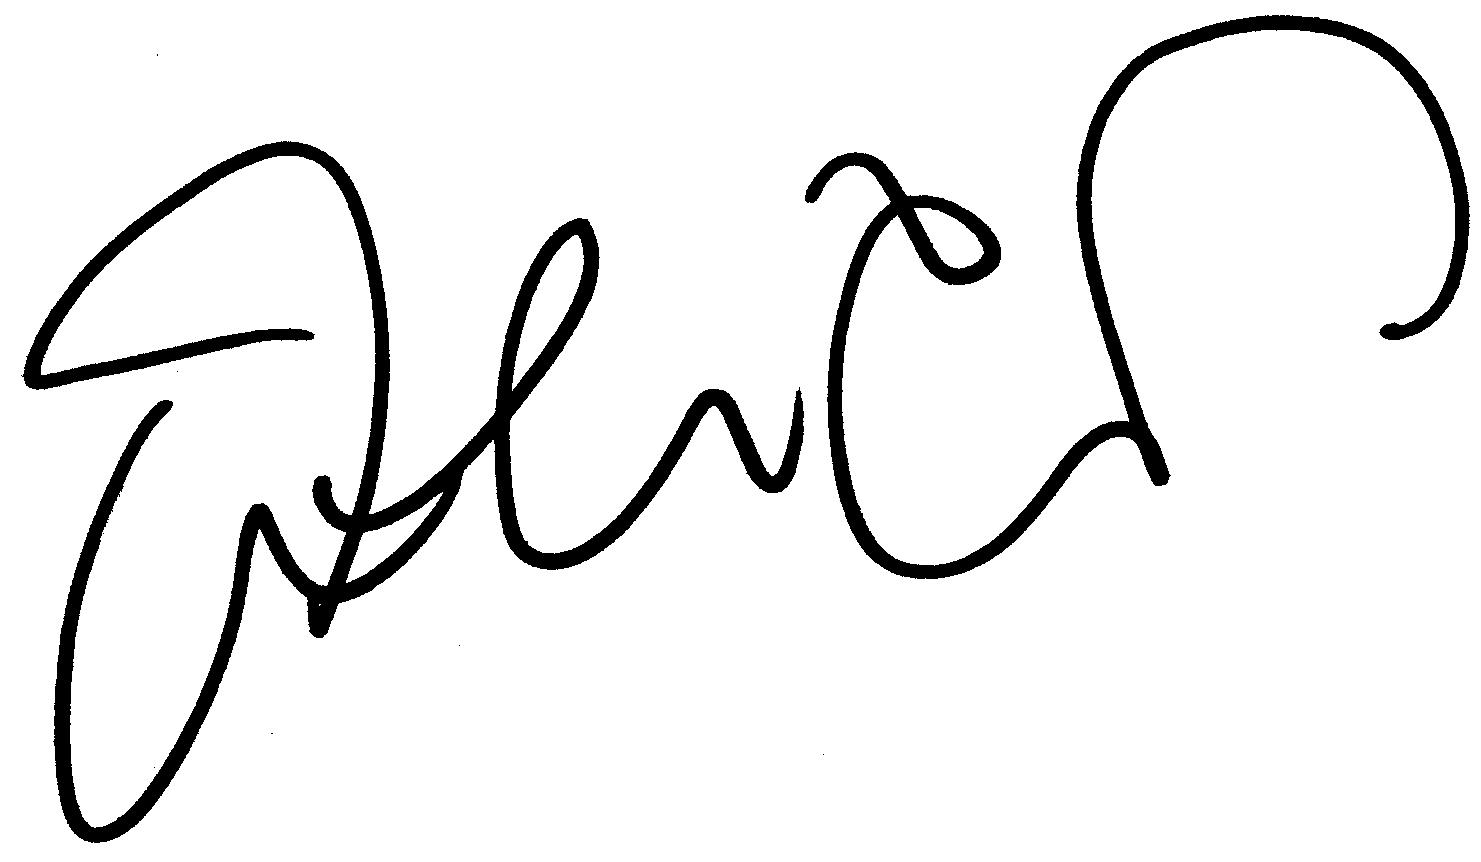 Jamie Lee Curtis autograph facsimile